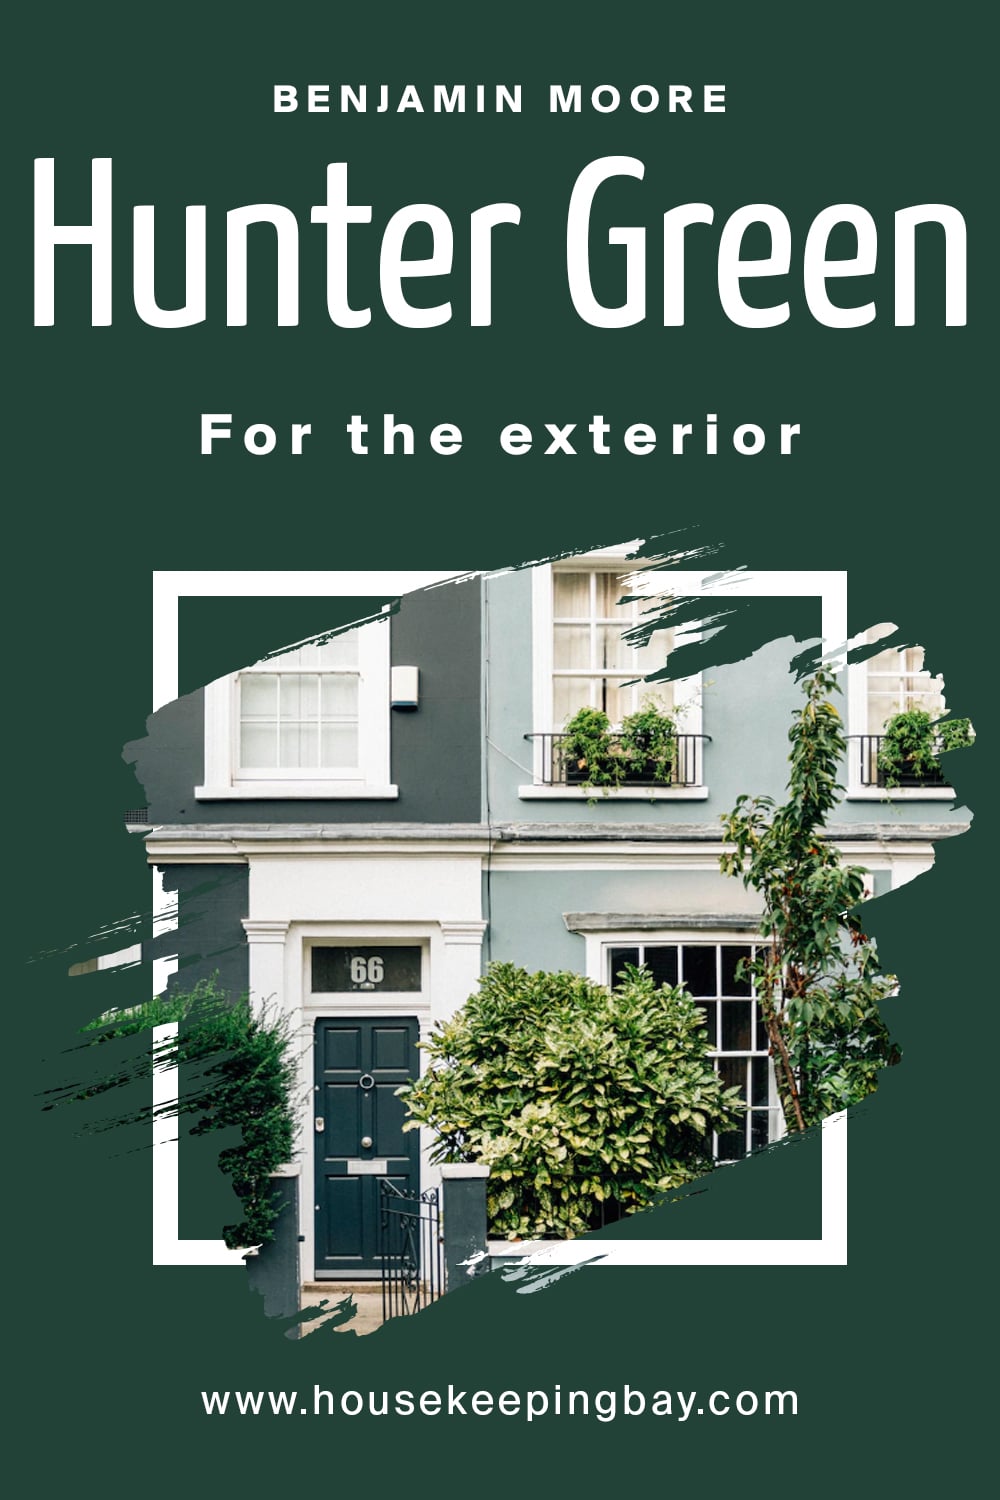 Benjamin Moore. Hunter Green For the exterior